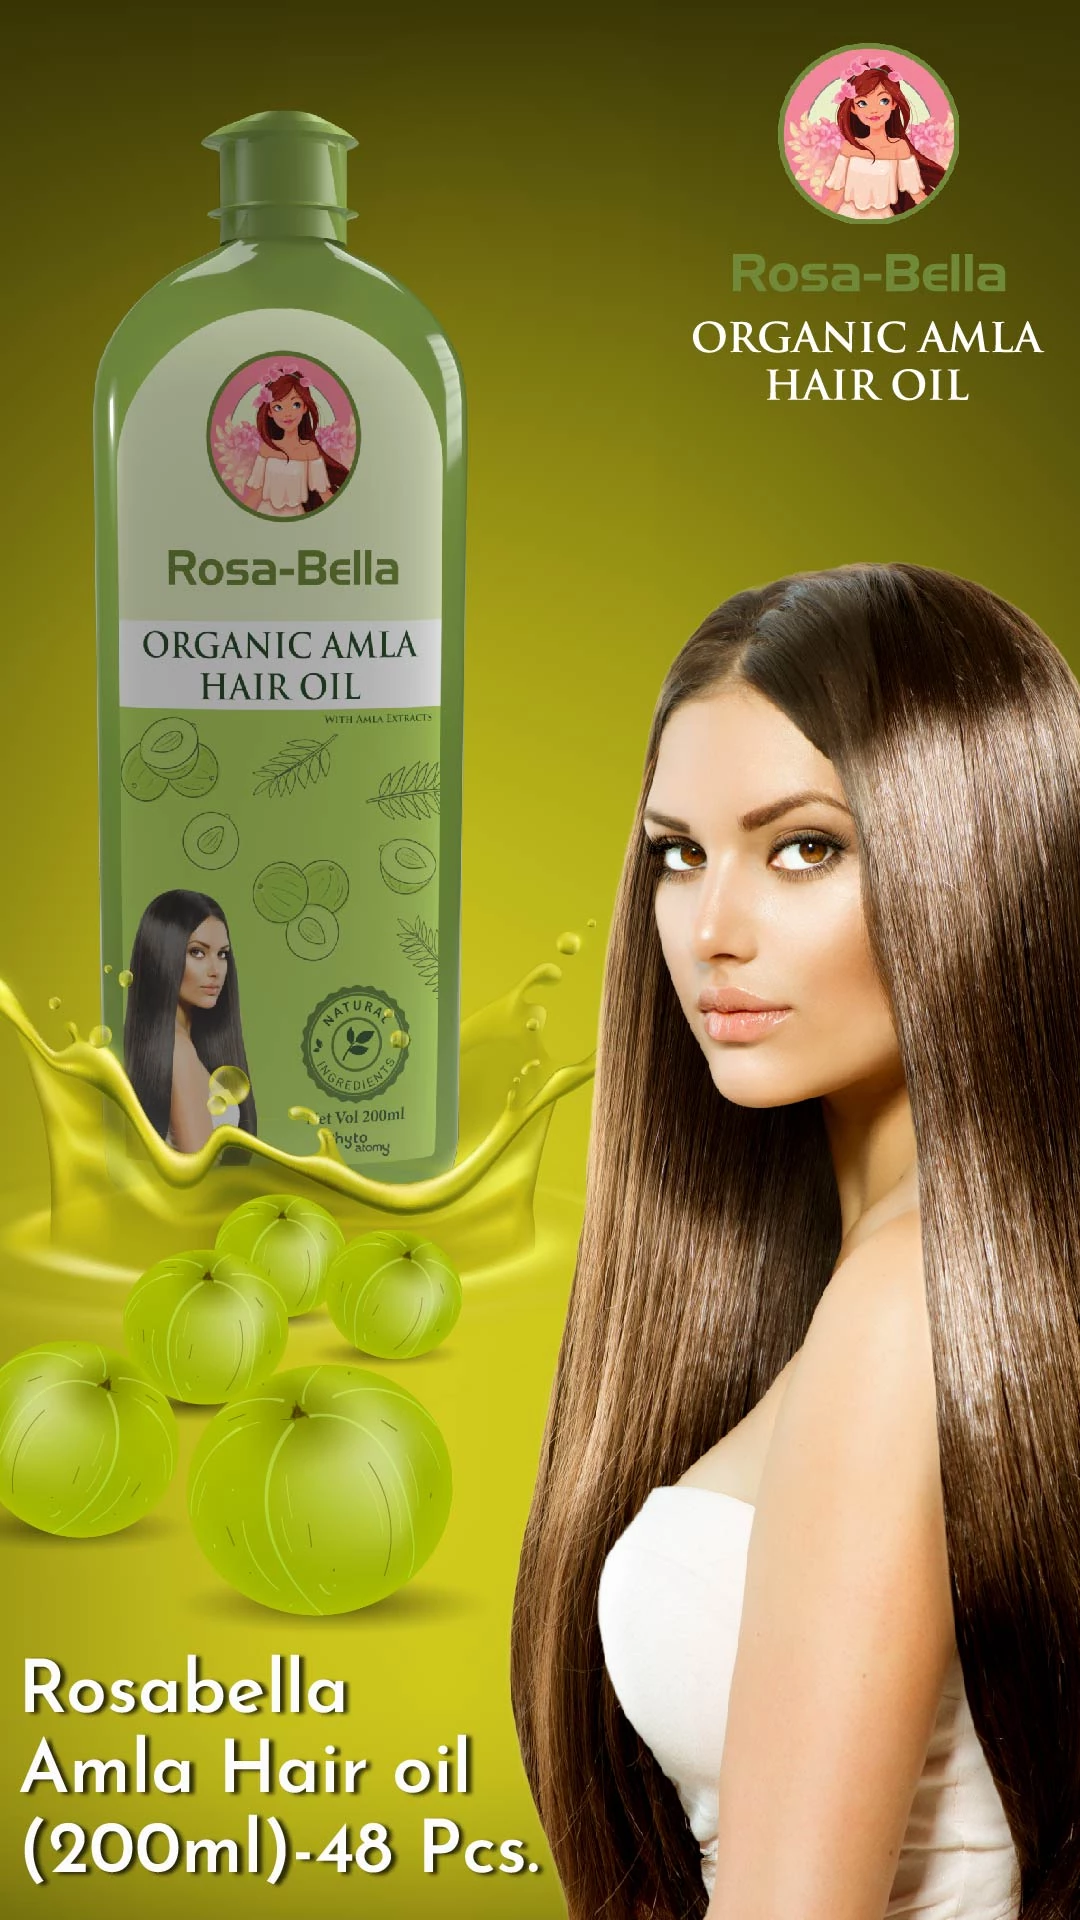 RBV B2B Rosabella Amla Hair oil (200ml)-48 Pcs.